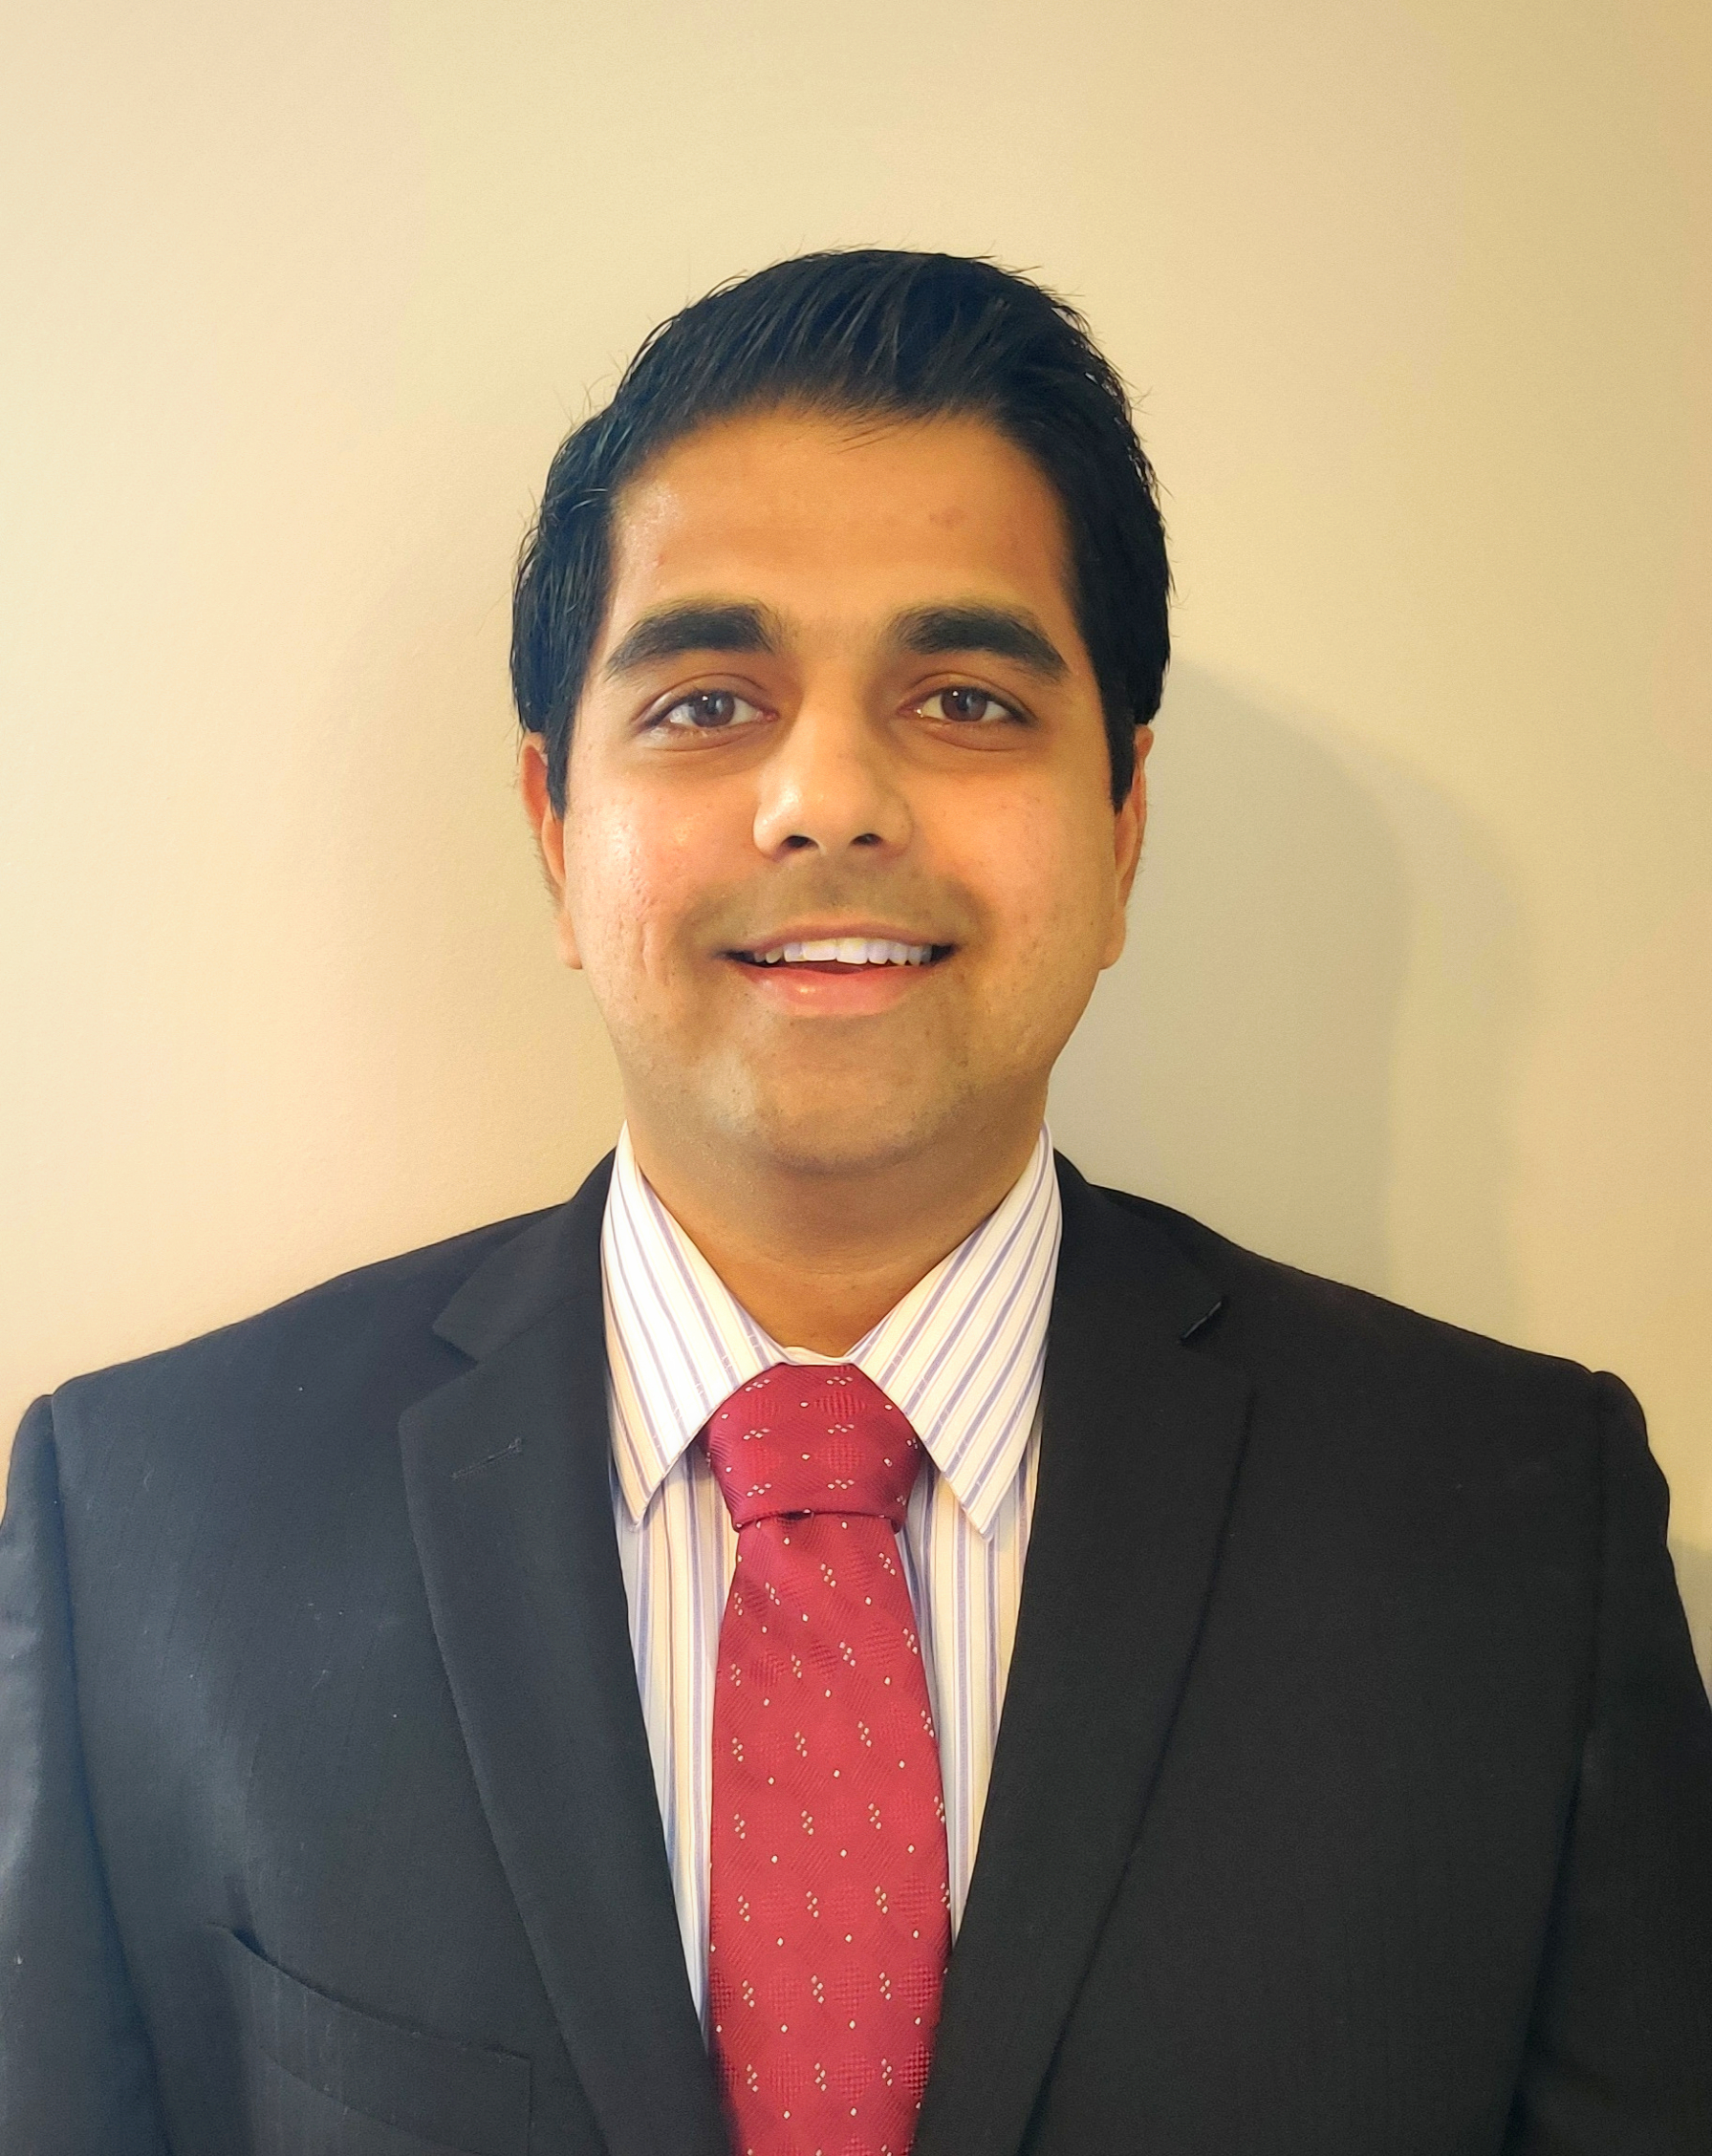 Allstate insurance agent Vatsal Patel